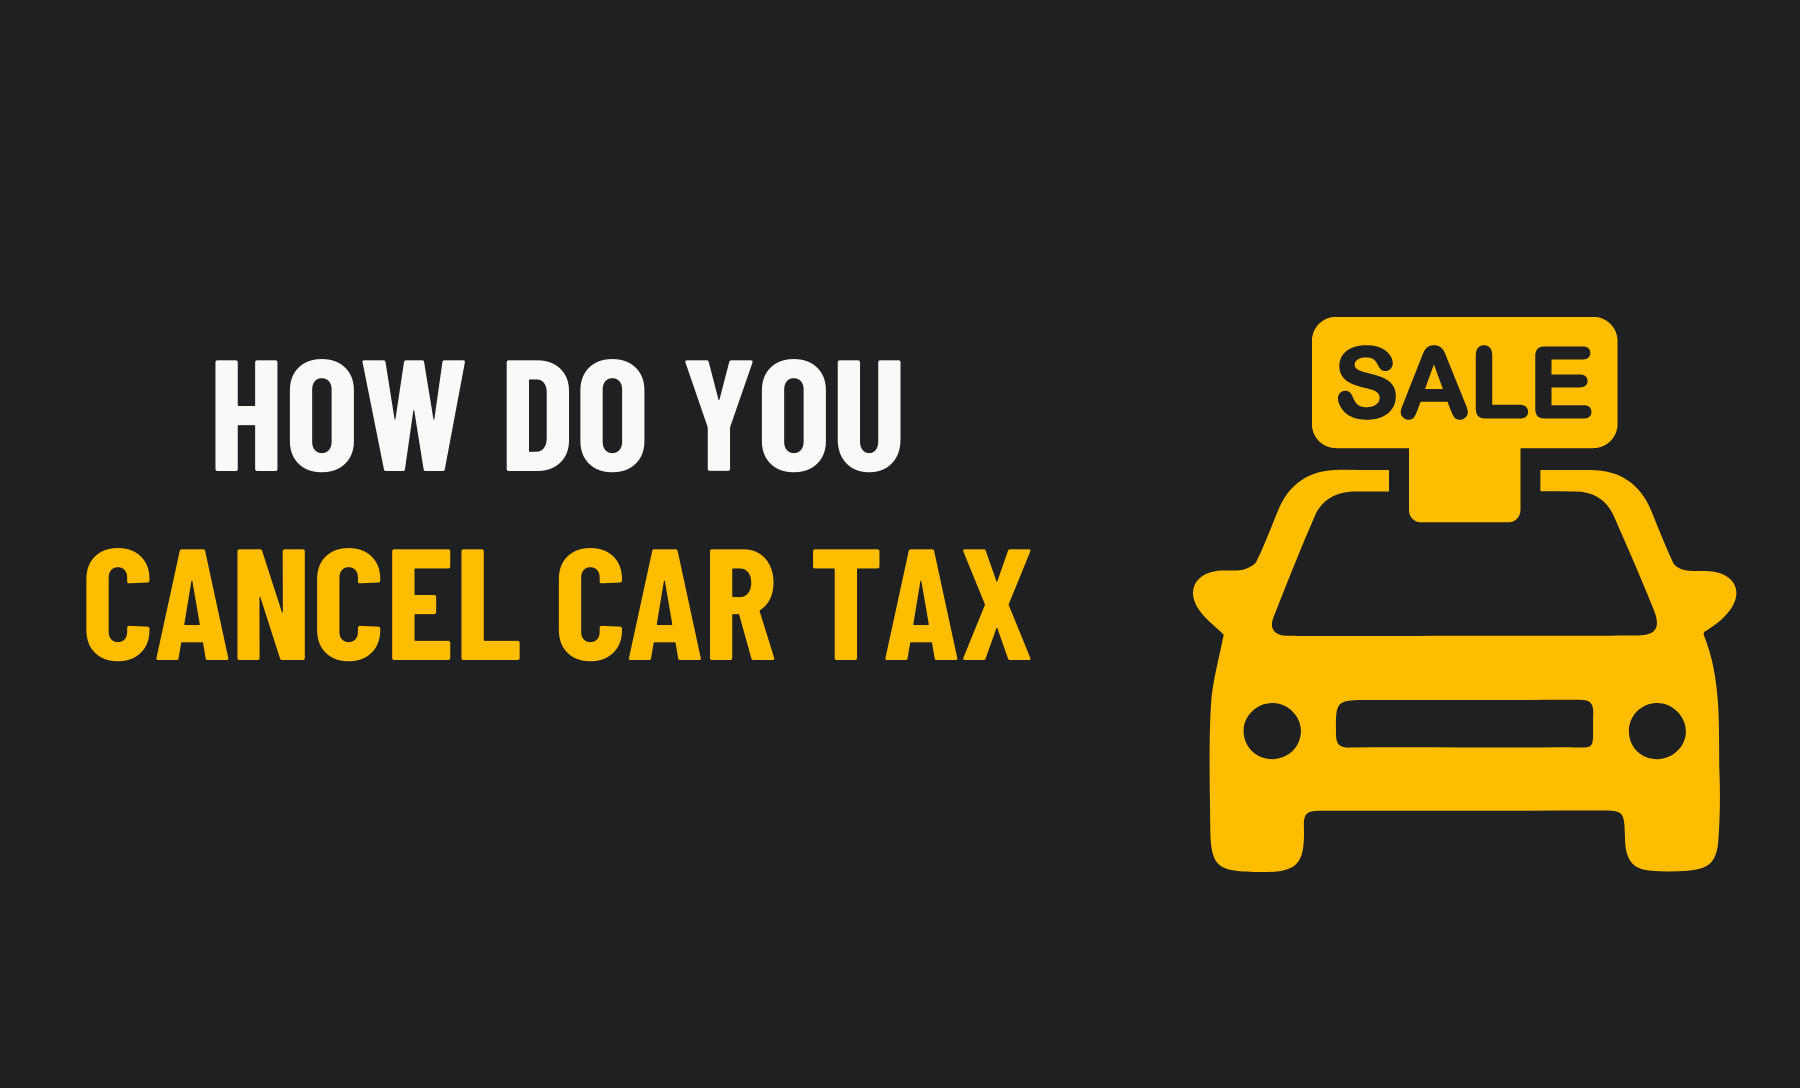 Cancel Car Tax